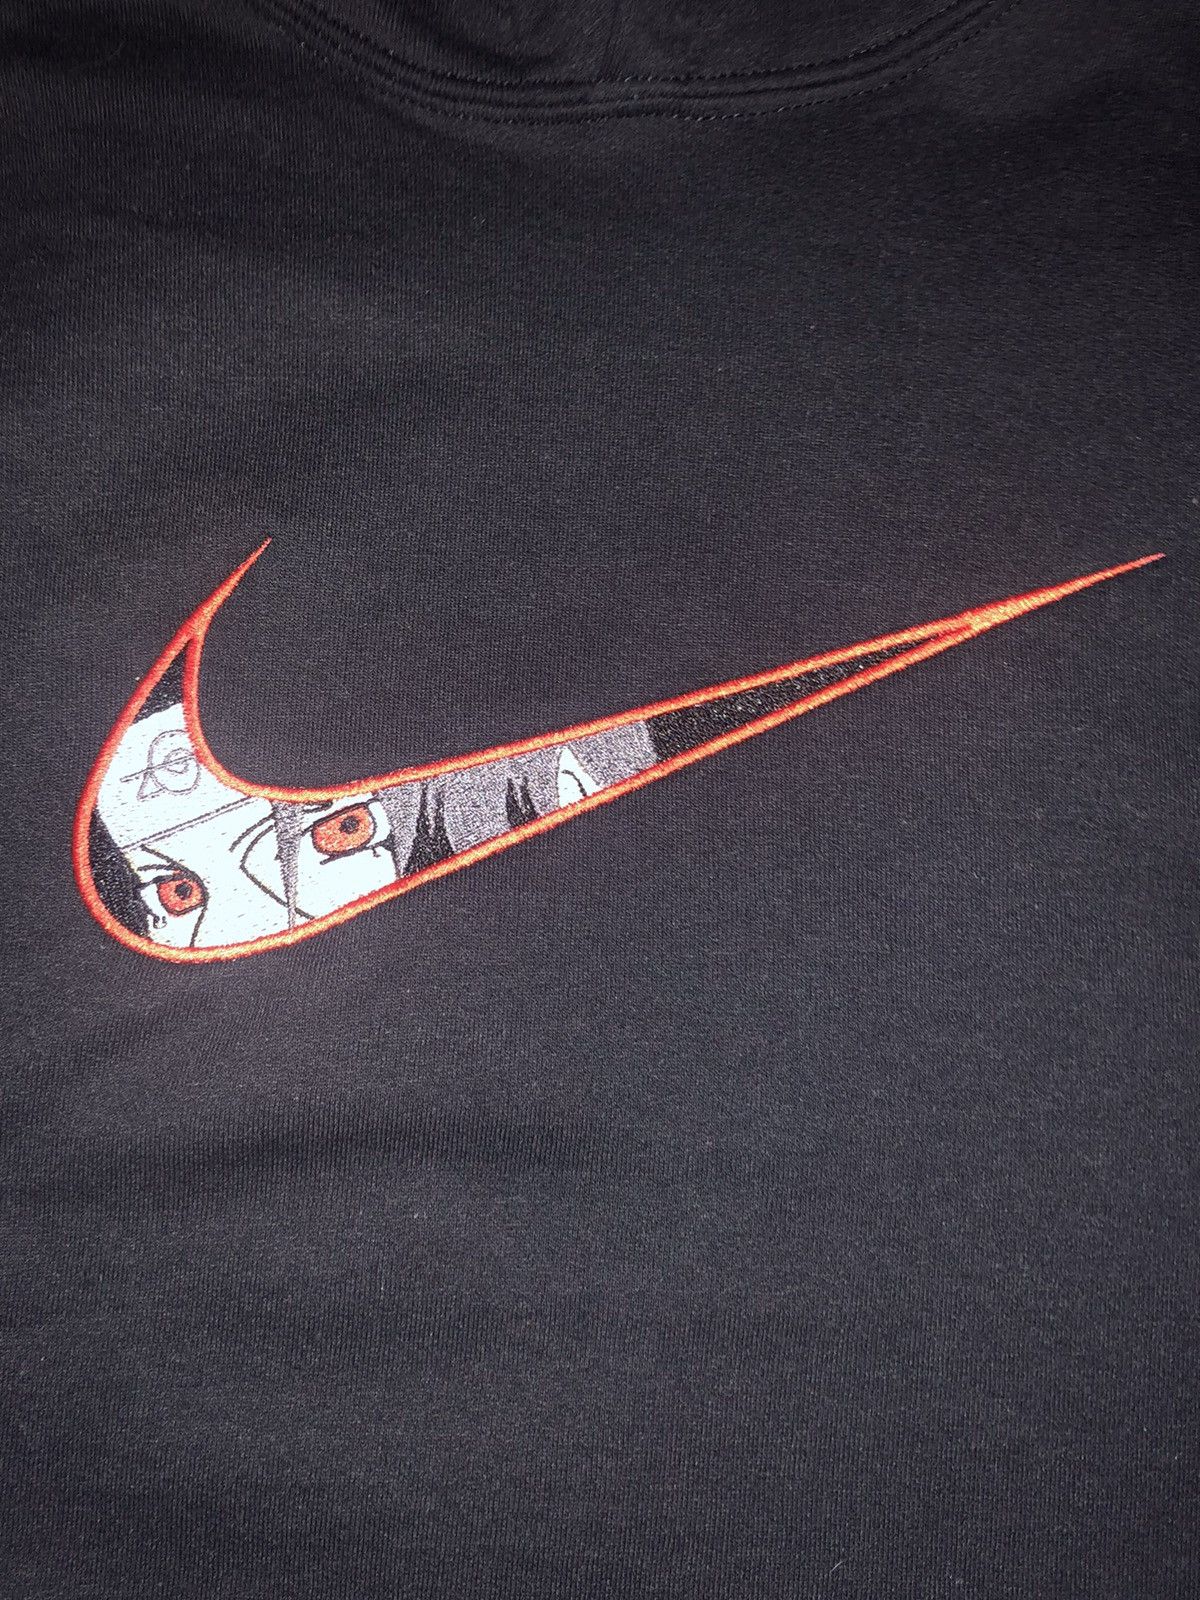 Nike Itachi Nike hoodie Size US L / EU 52-54 / 3 - 5 Thumbnail